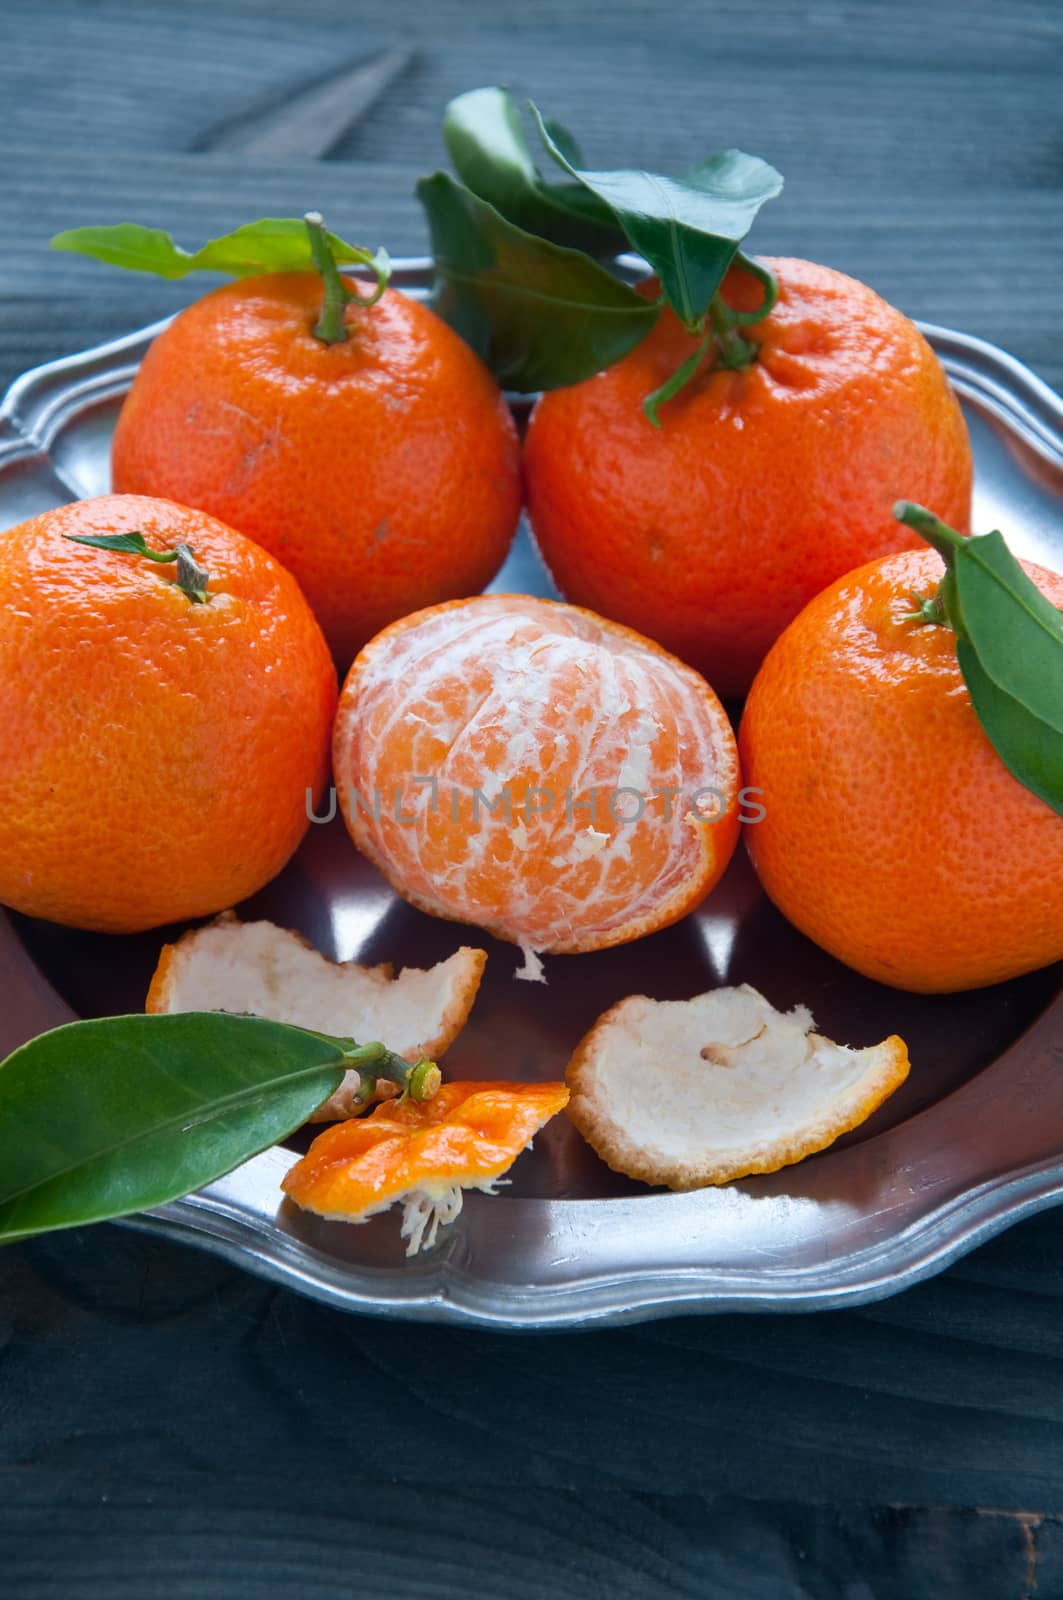 Mandarin orange fruit typical of winter, italy